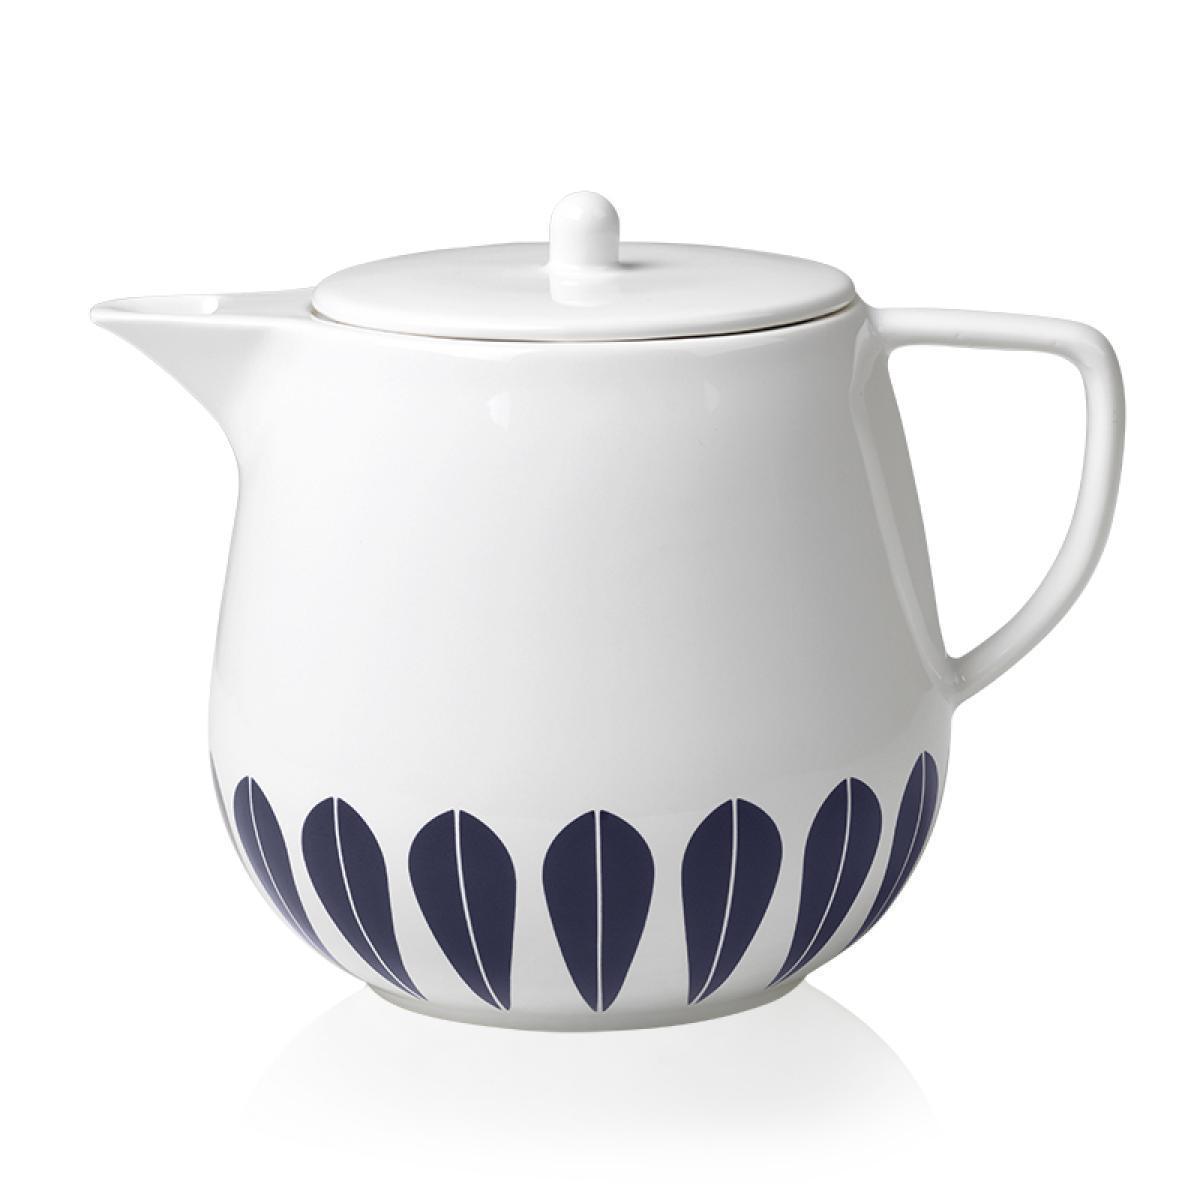 Lucie Kaas Arne Clausen Collection Teapot, bleu foncé